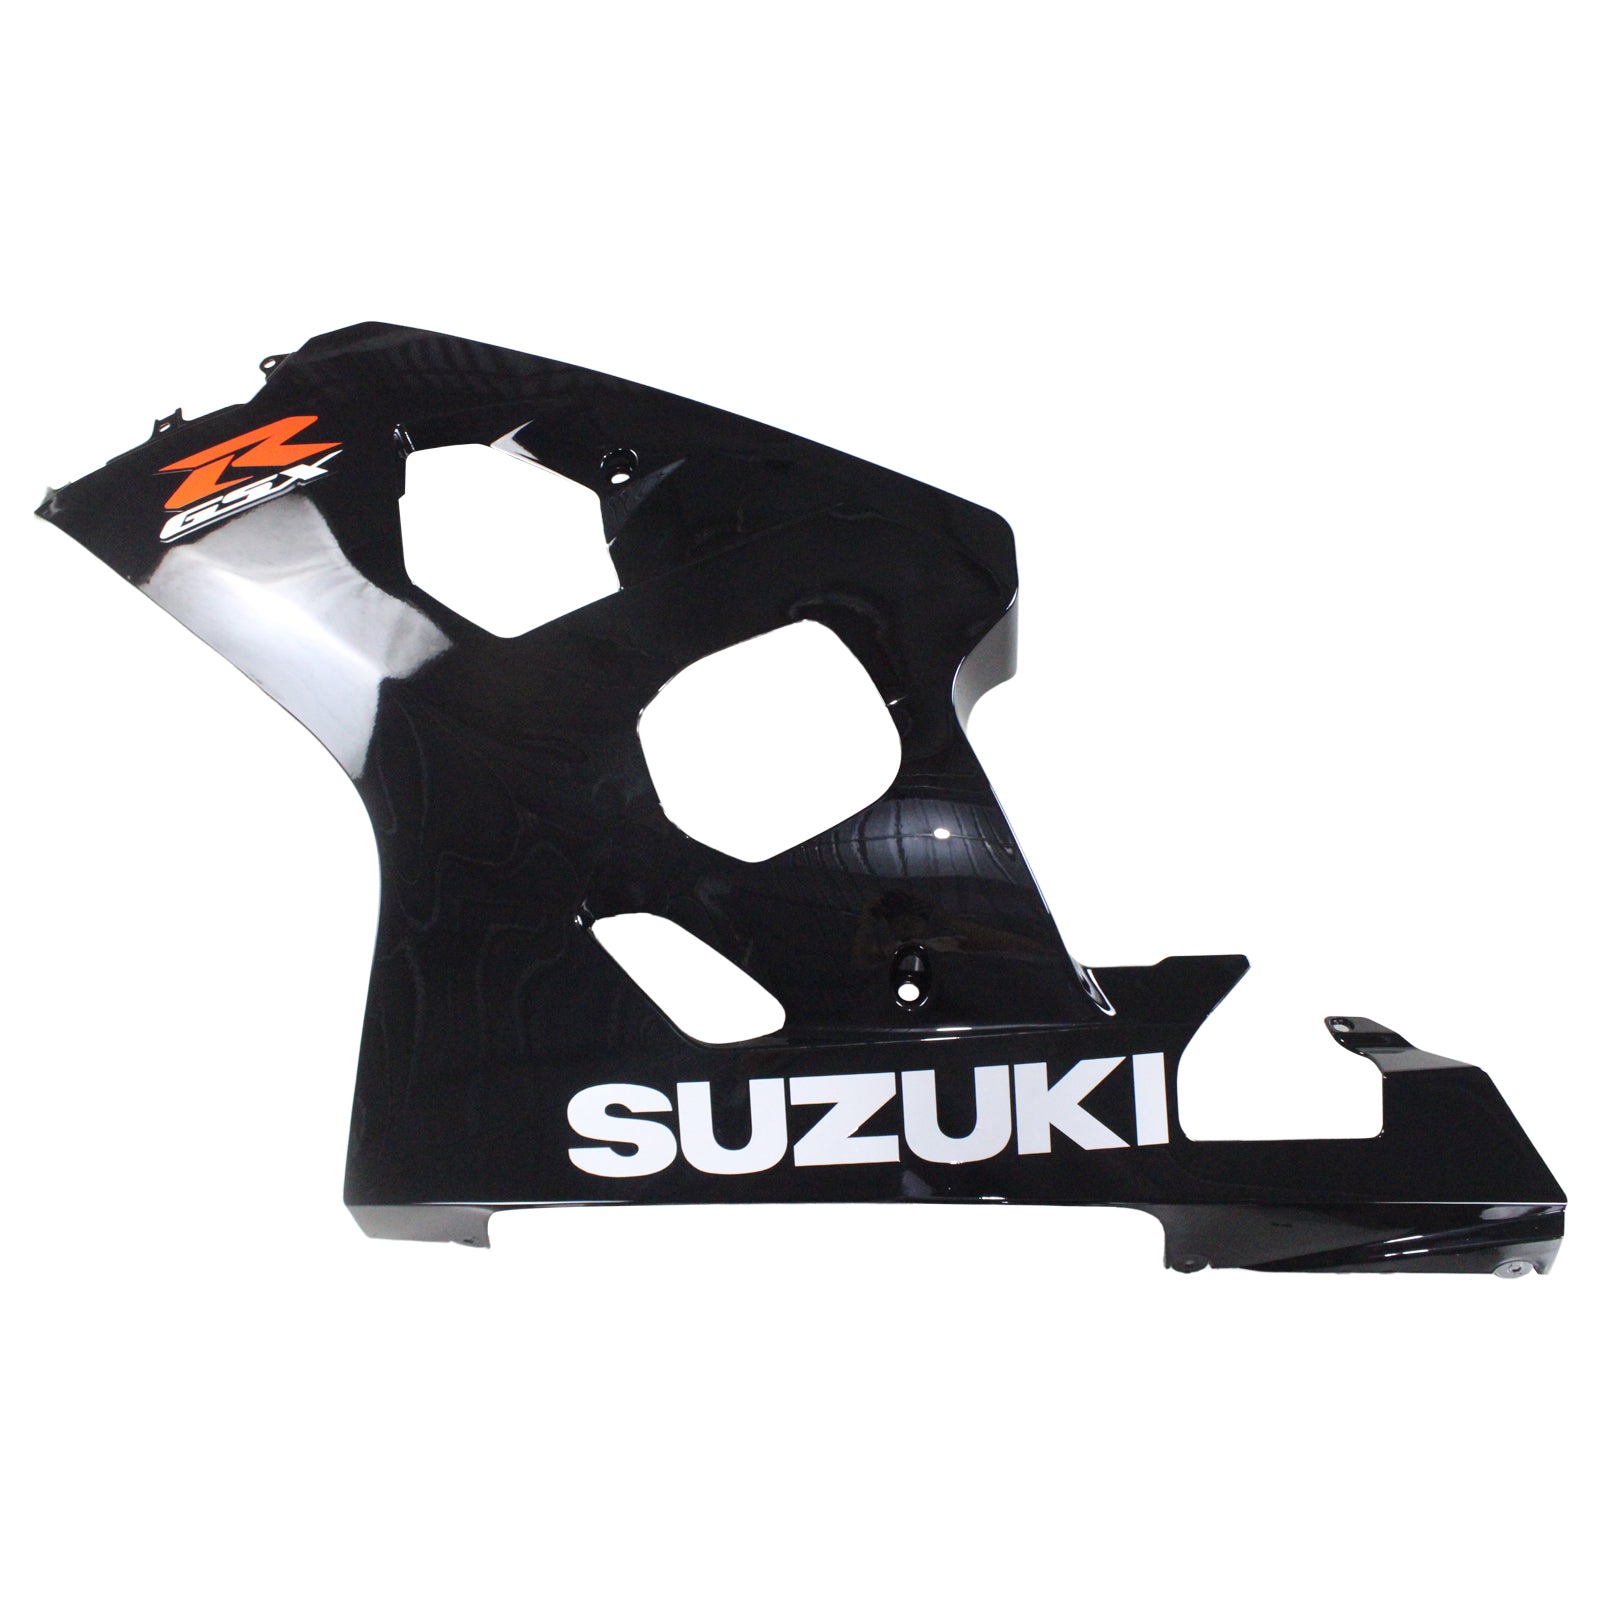 Amotopart Suzuki 2004-2005 GSXR 600/750 Gloss Black Fairing Kit